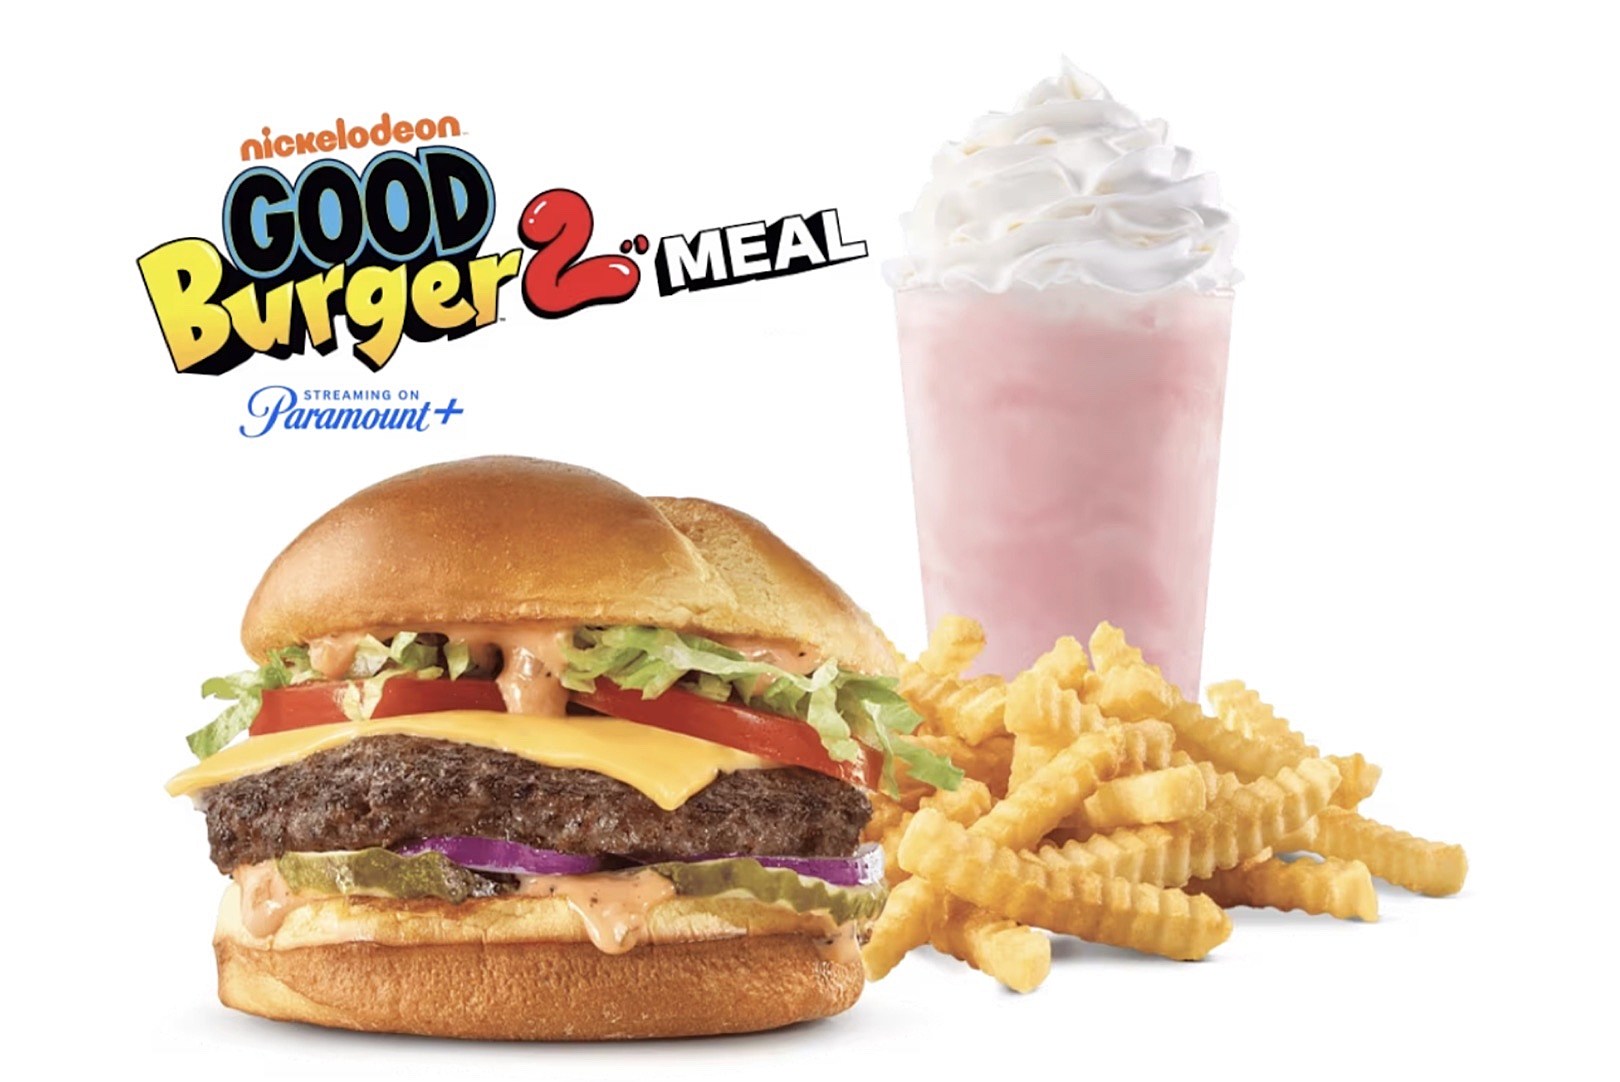 Good Burger 2 - Watch Full Movie on Paramount Plus